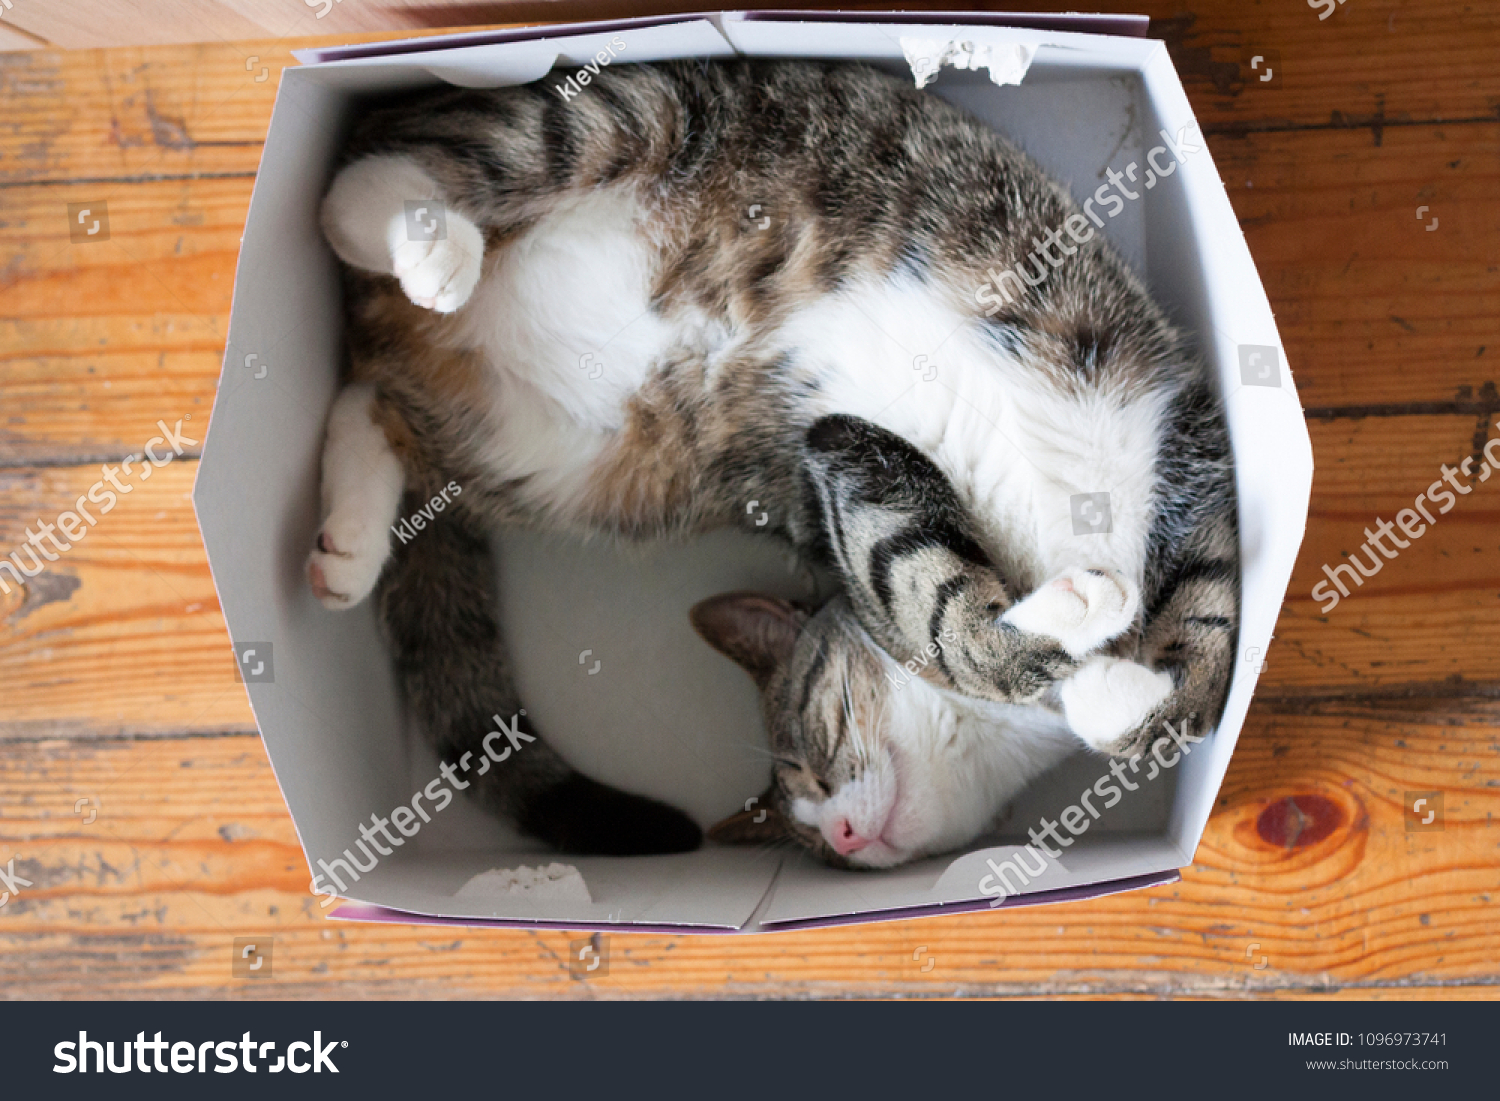 Striped cat sleeping in a cardboard box #1096973741